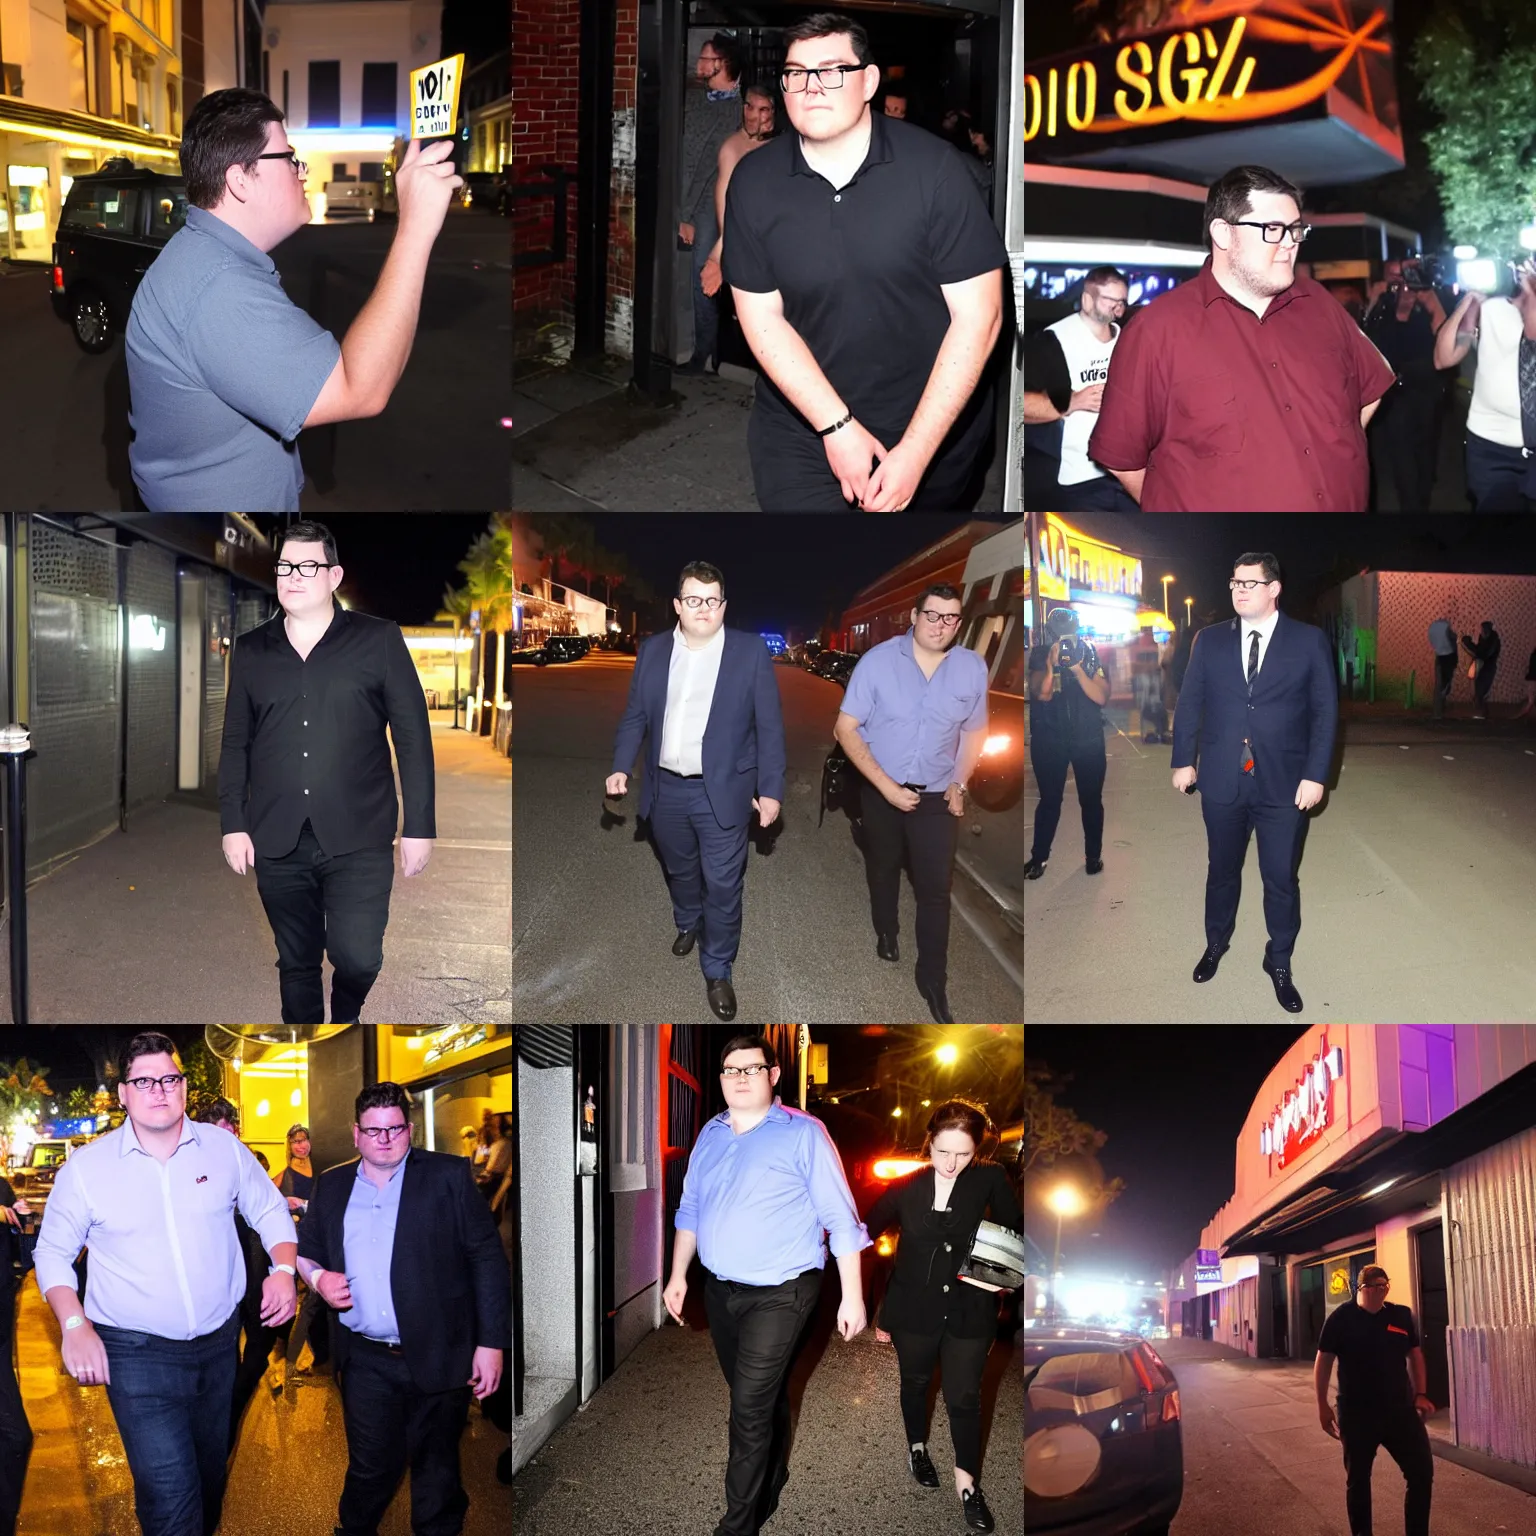 Prompt: George Christensen outside a nightclub, nighttime, paparazzi photo